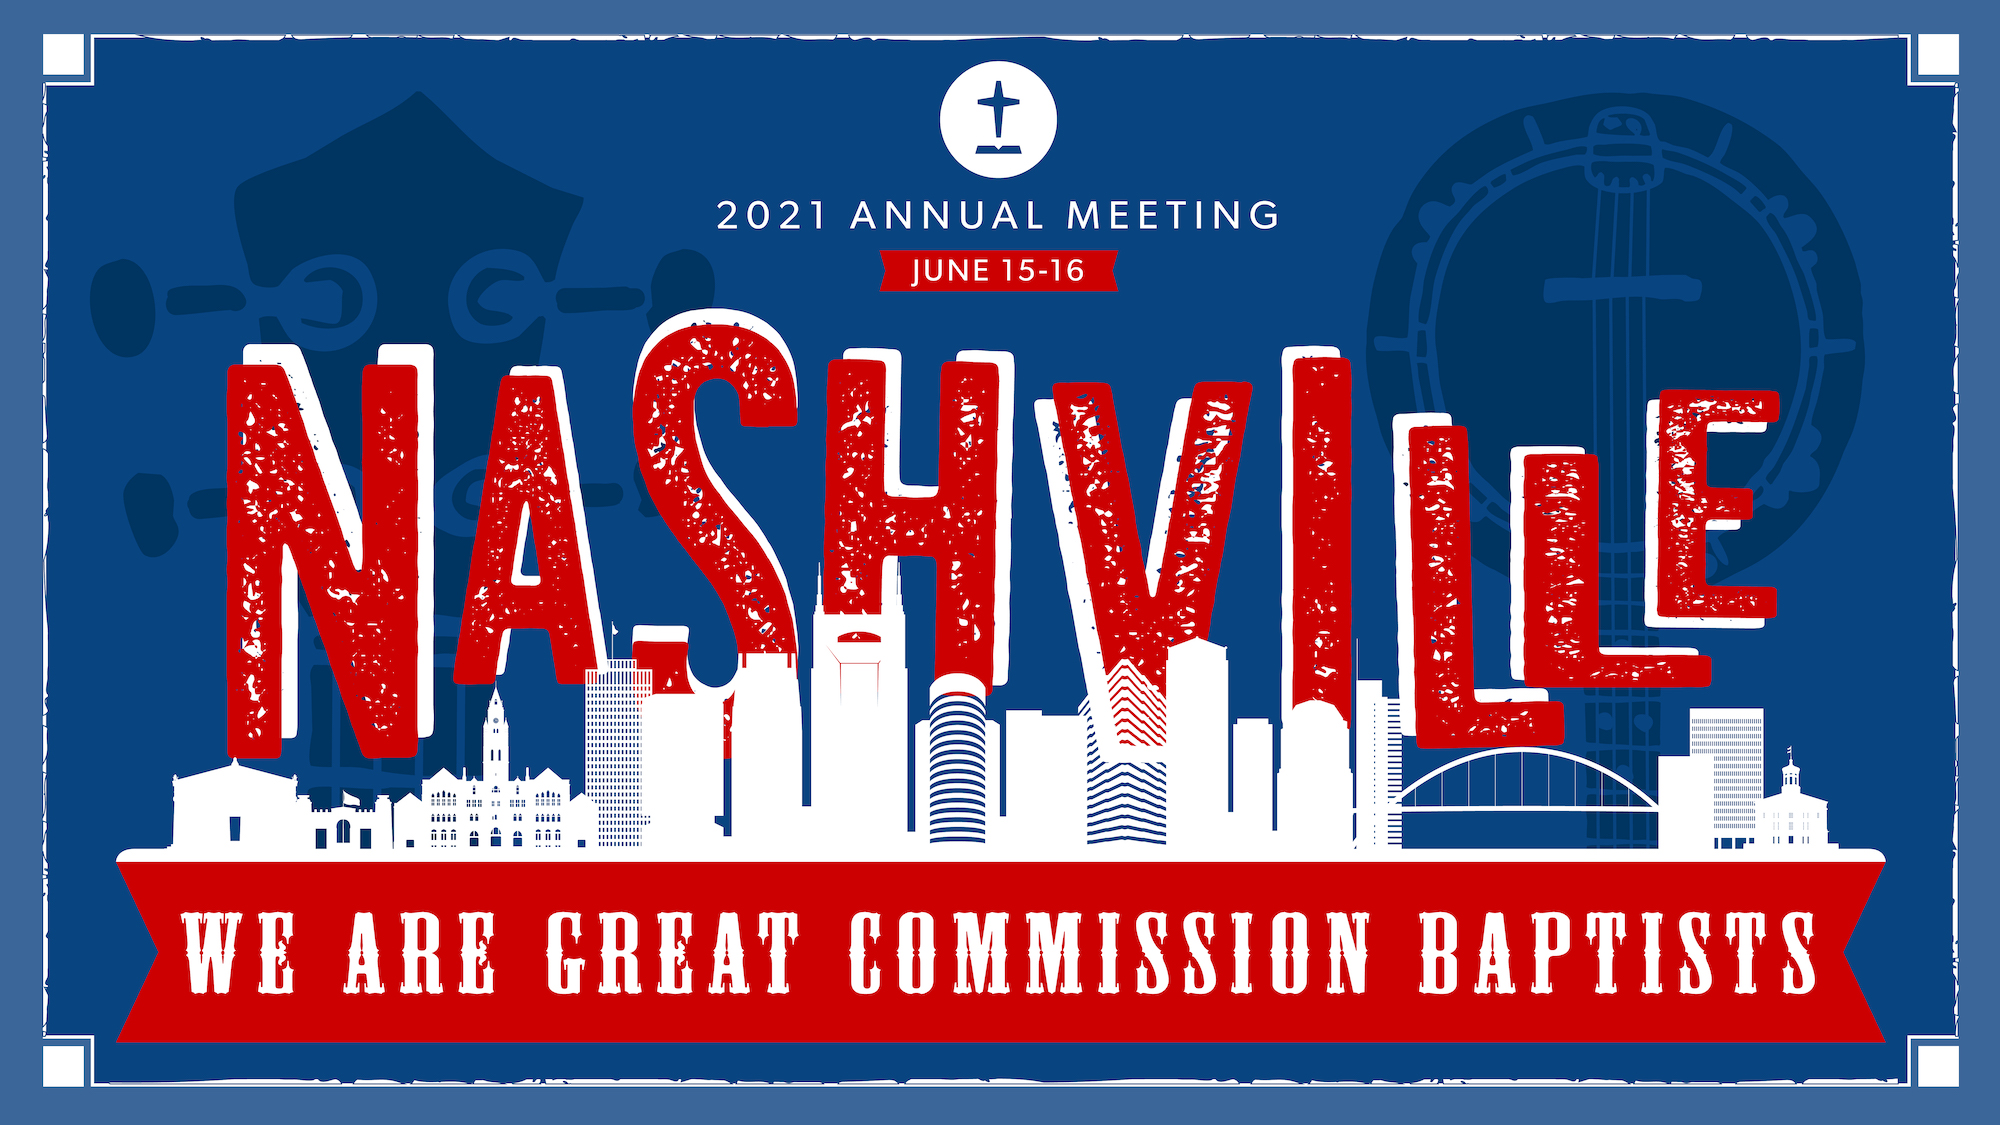 2021 SBC Annual Meeting - Nashville TN